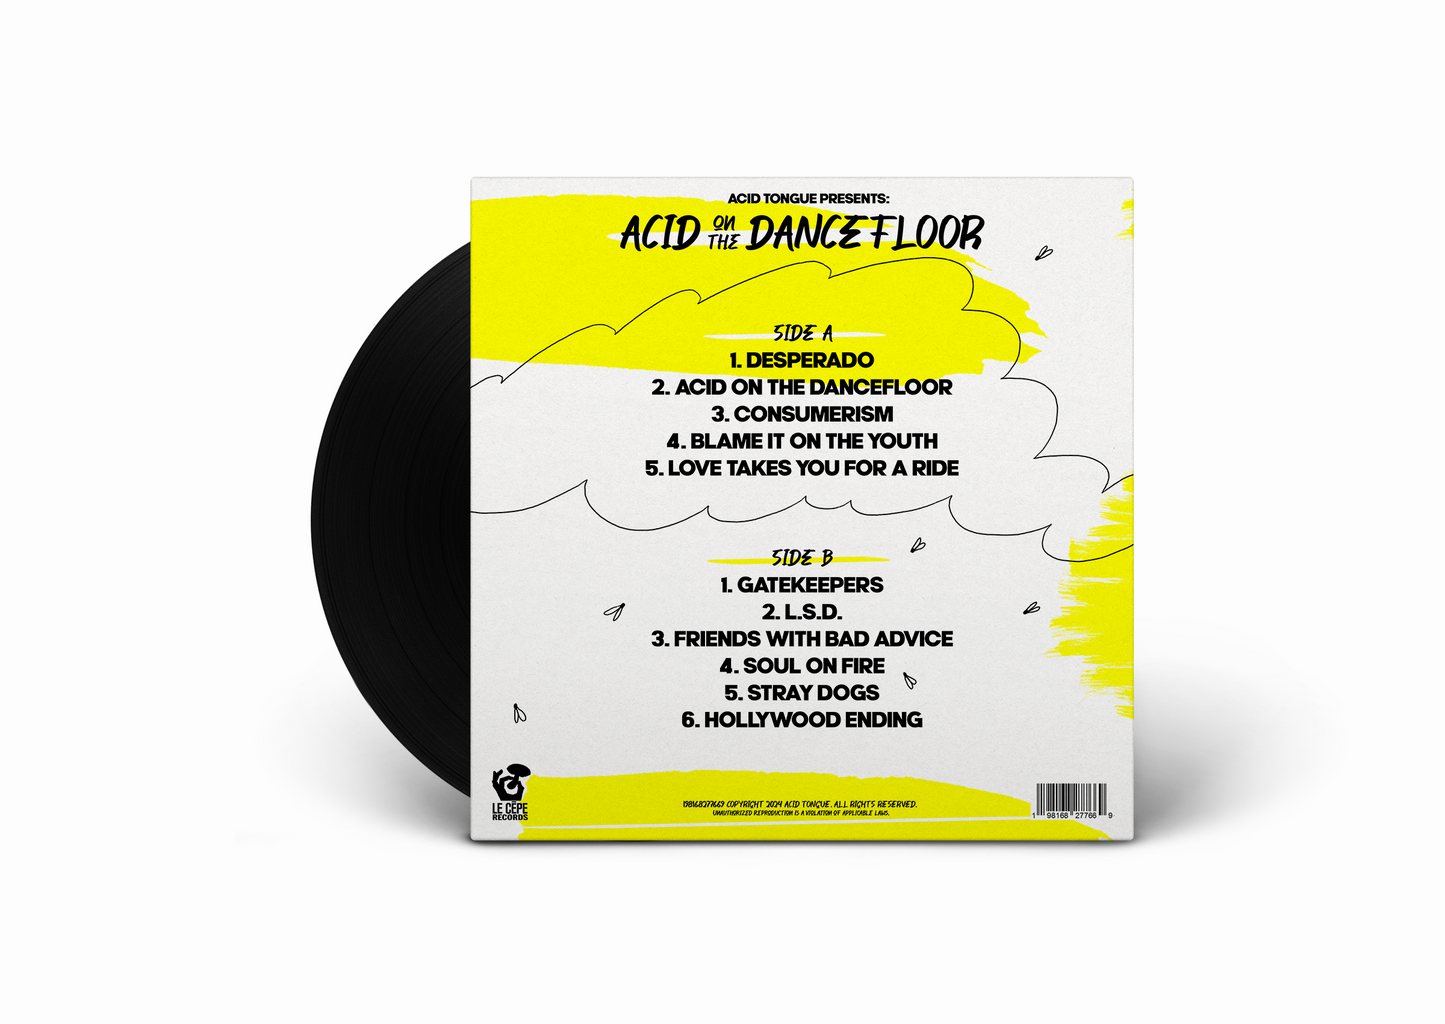 Acid Tongue "Acid on the Dancefloor" - 12" Standard Vinyl